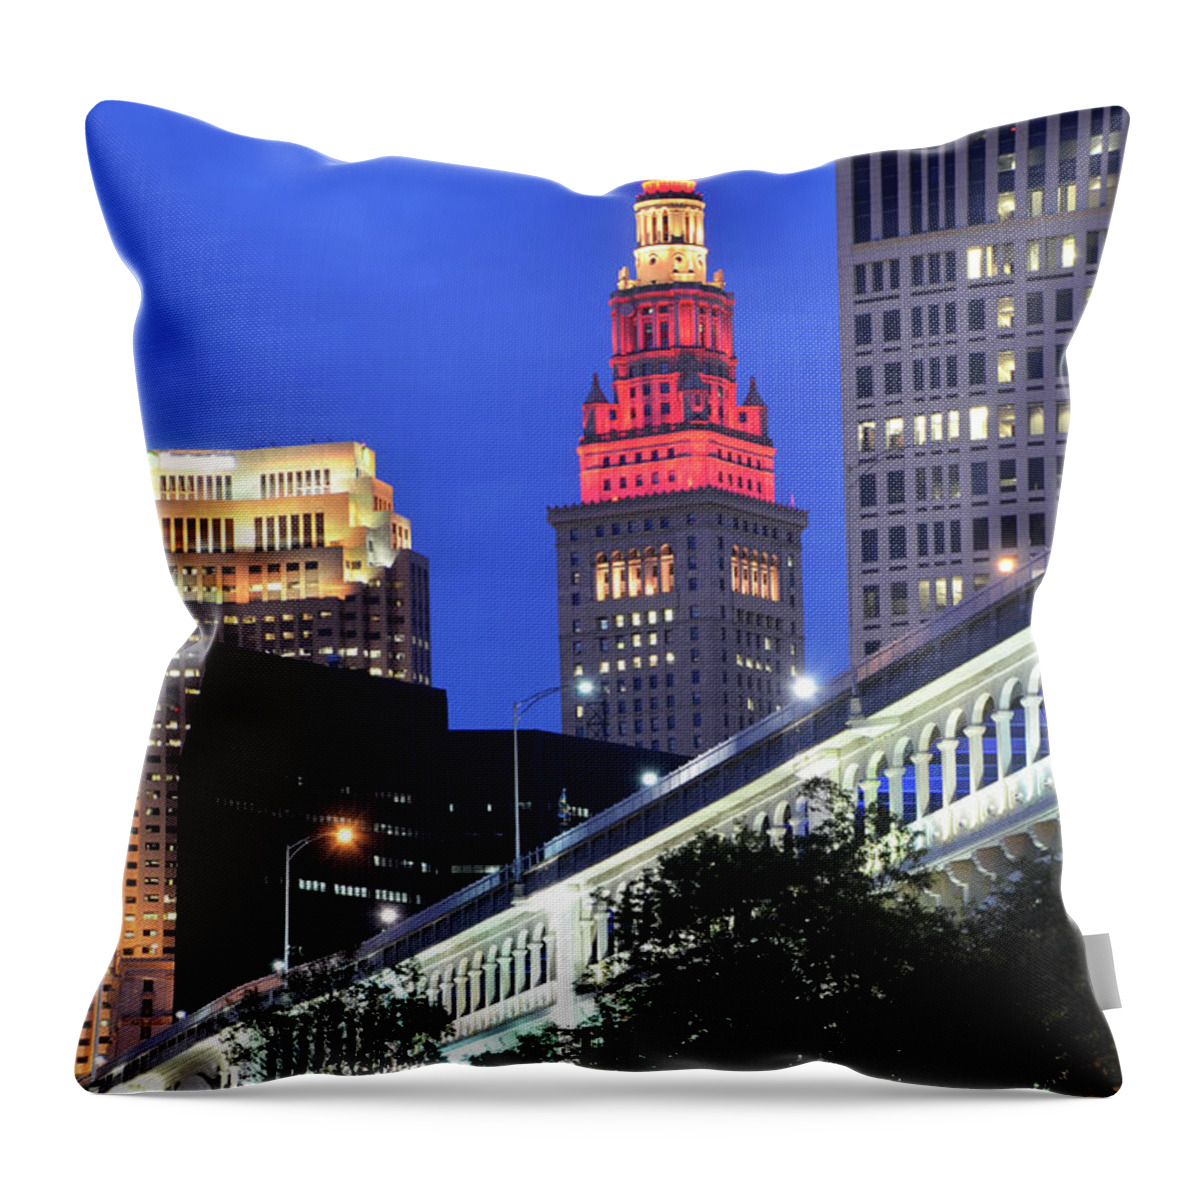 Horizontal Throw Pillow featuring the photograph Terminal Tower by Ann Bridges